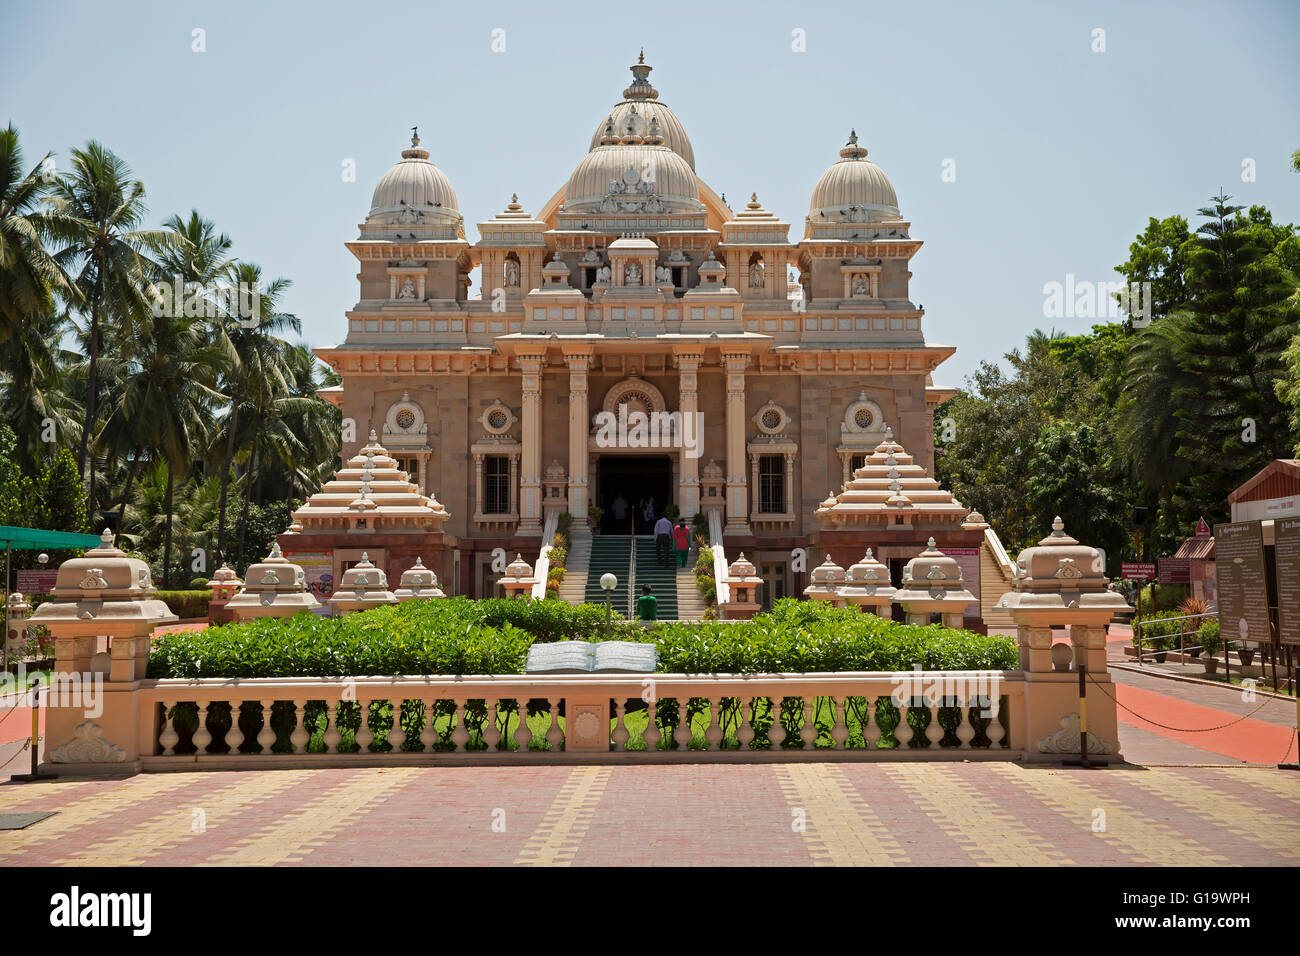 Sri Ramakrishna Math, tempio universale in Chennai India Foto Stock